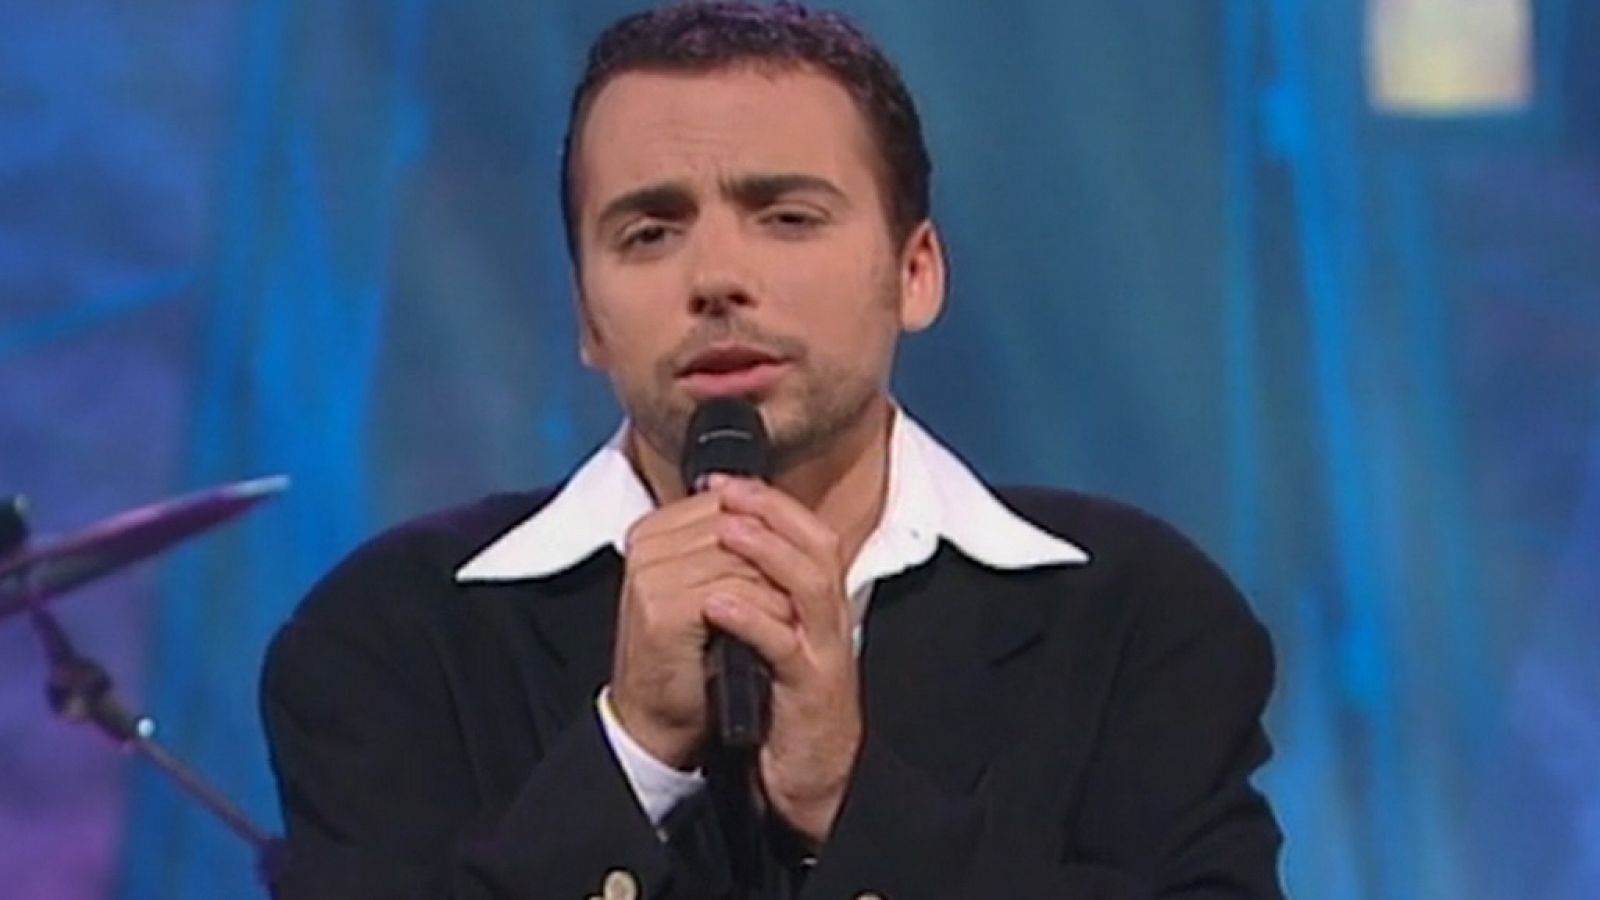 Festival de Eurovisión 1997 - Marcos Llunas cantó "Sin rencor"